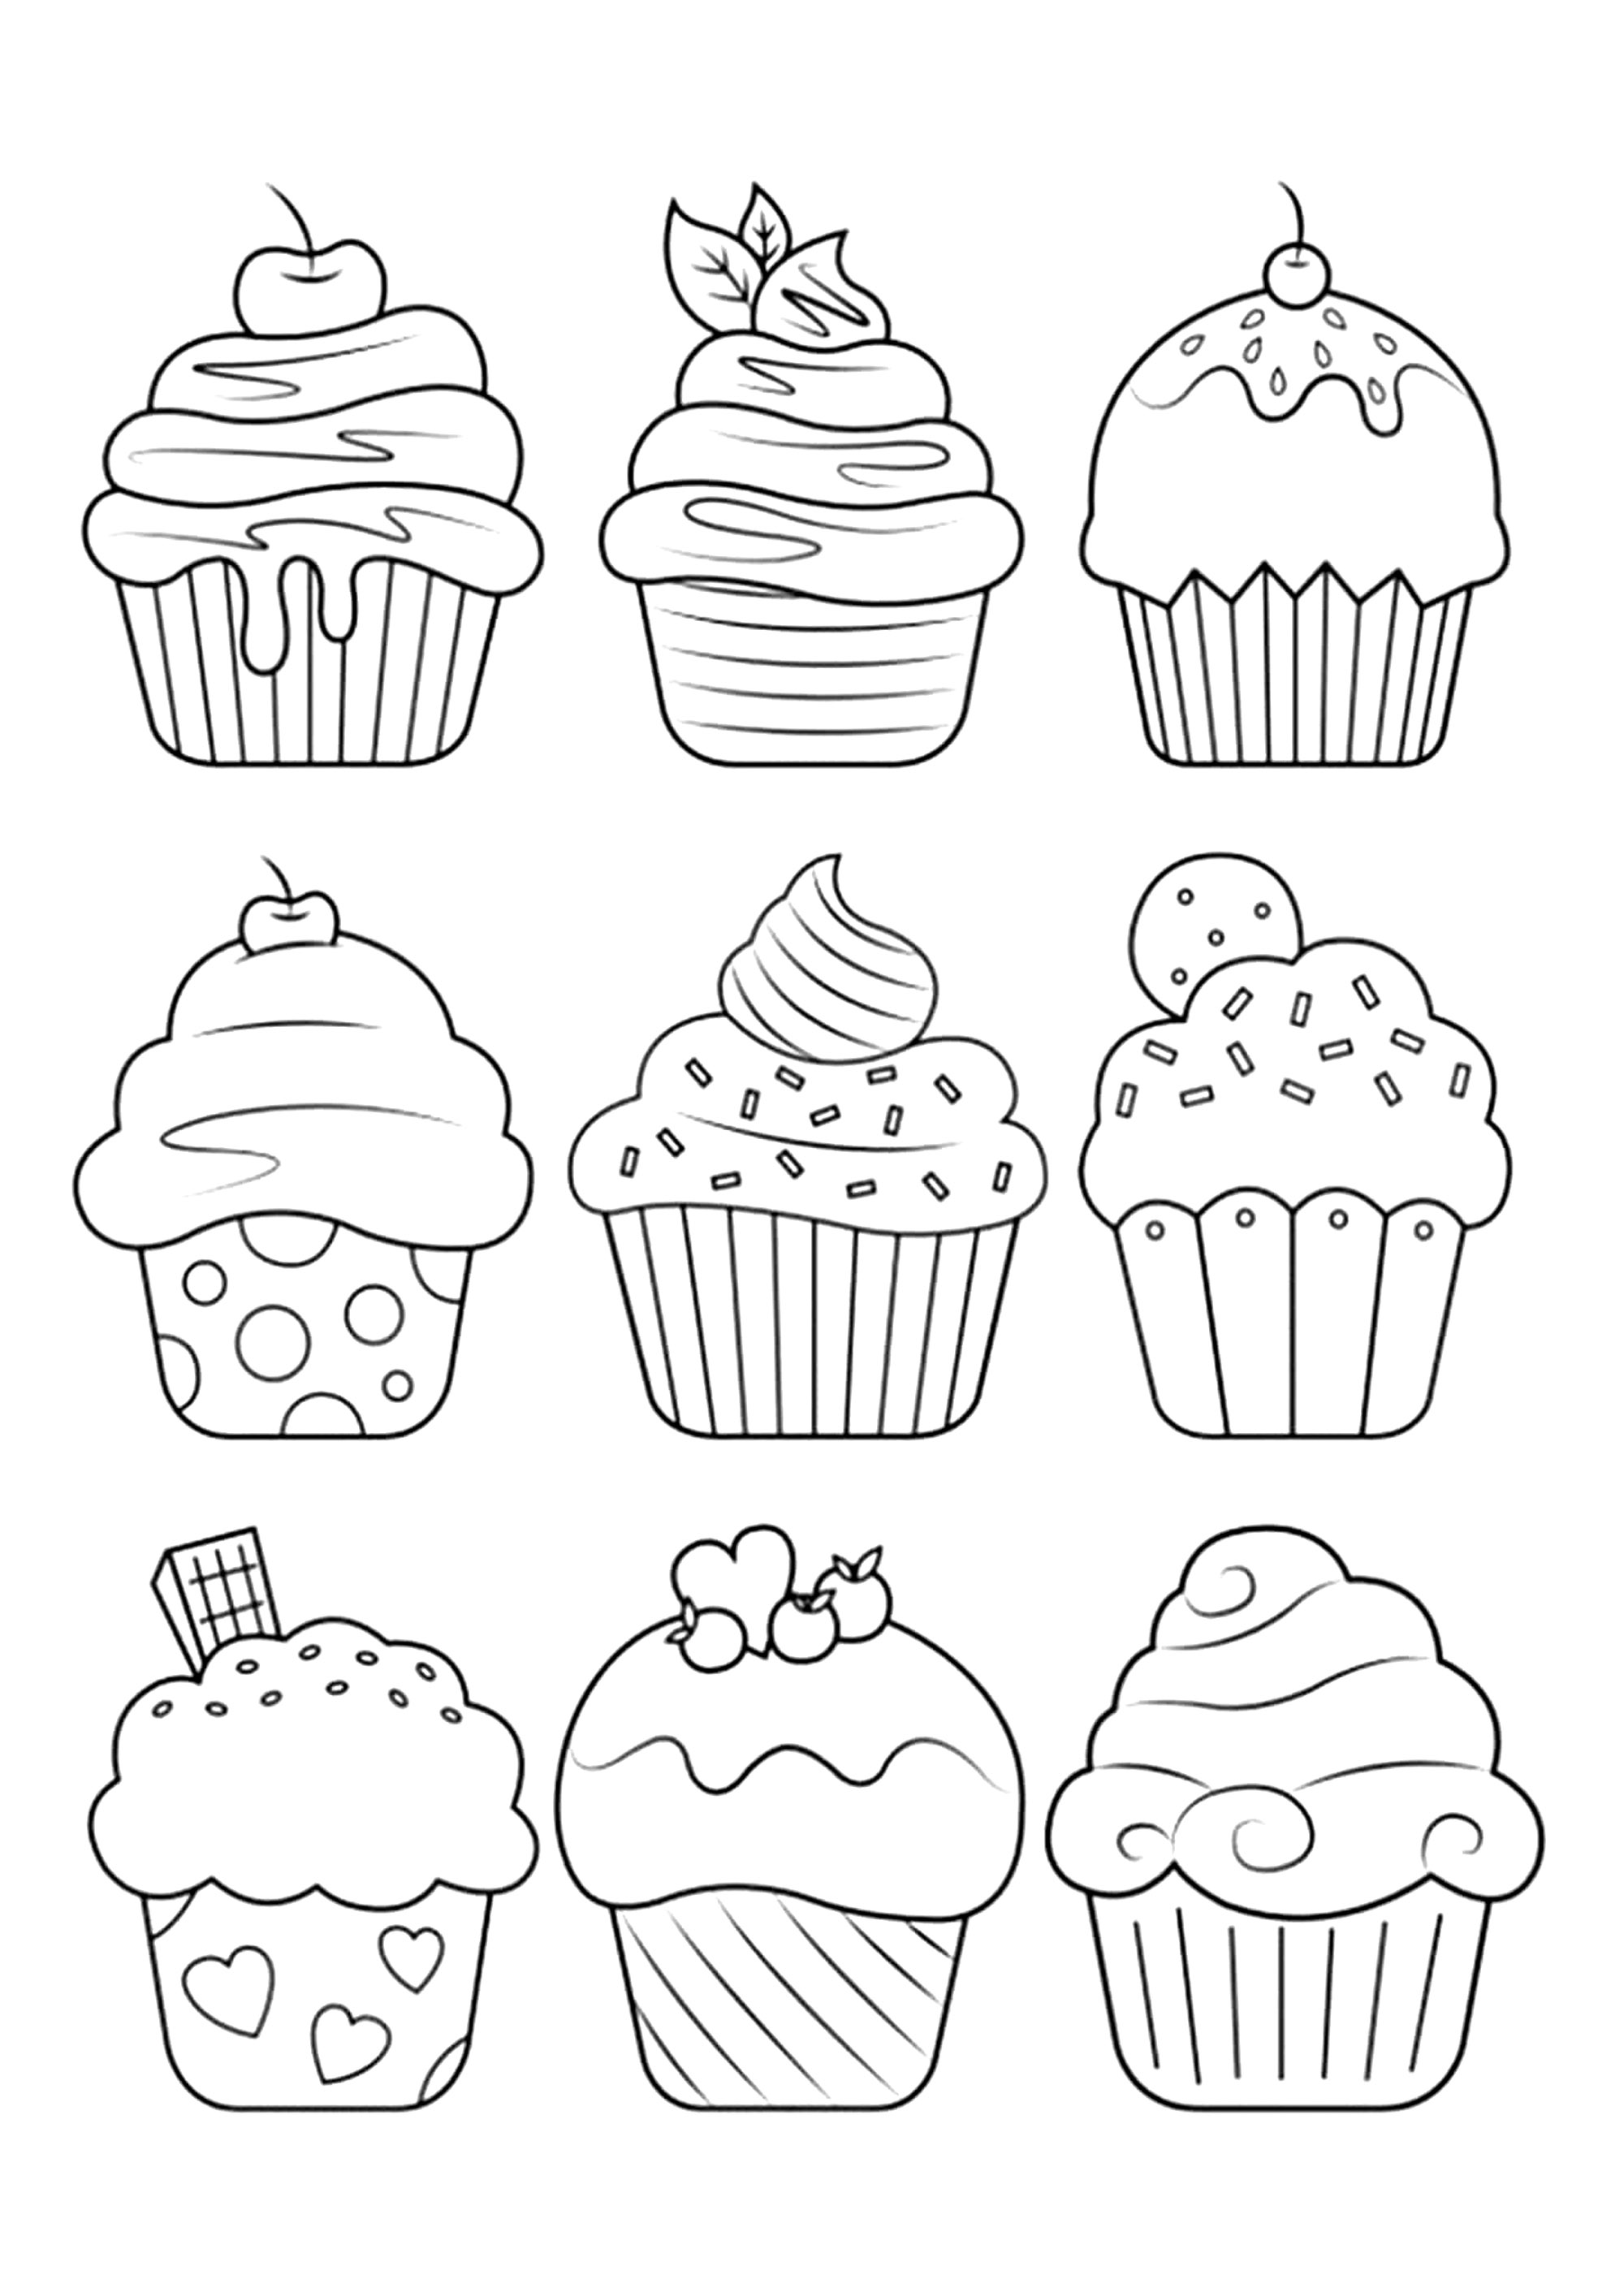 Nove cupcakes bonitos para colorir